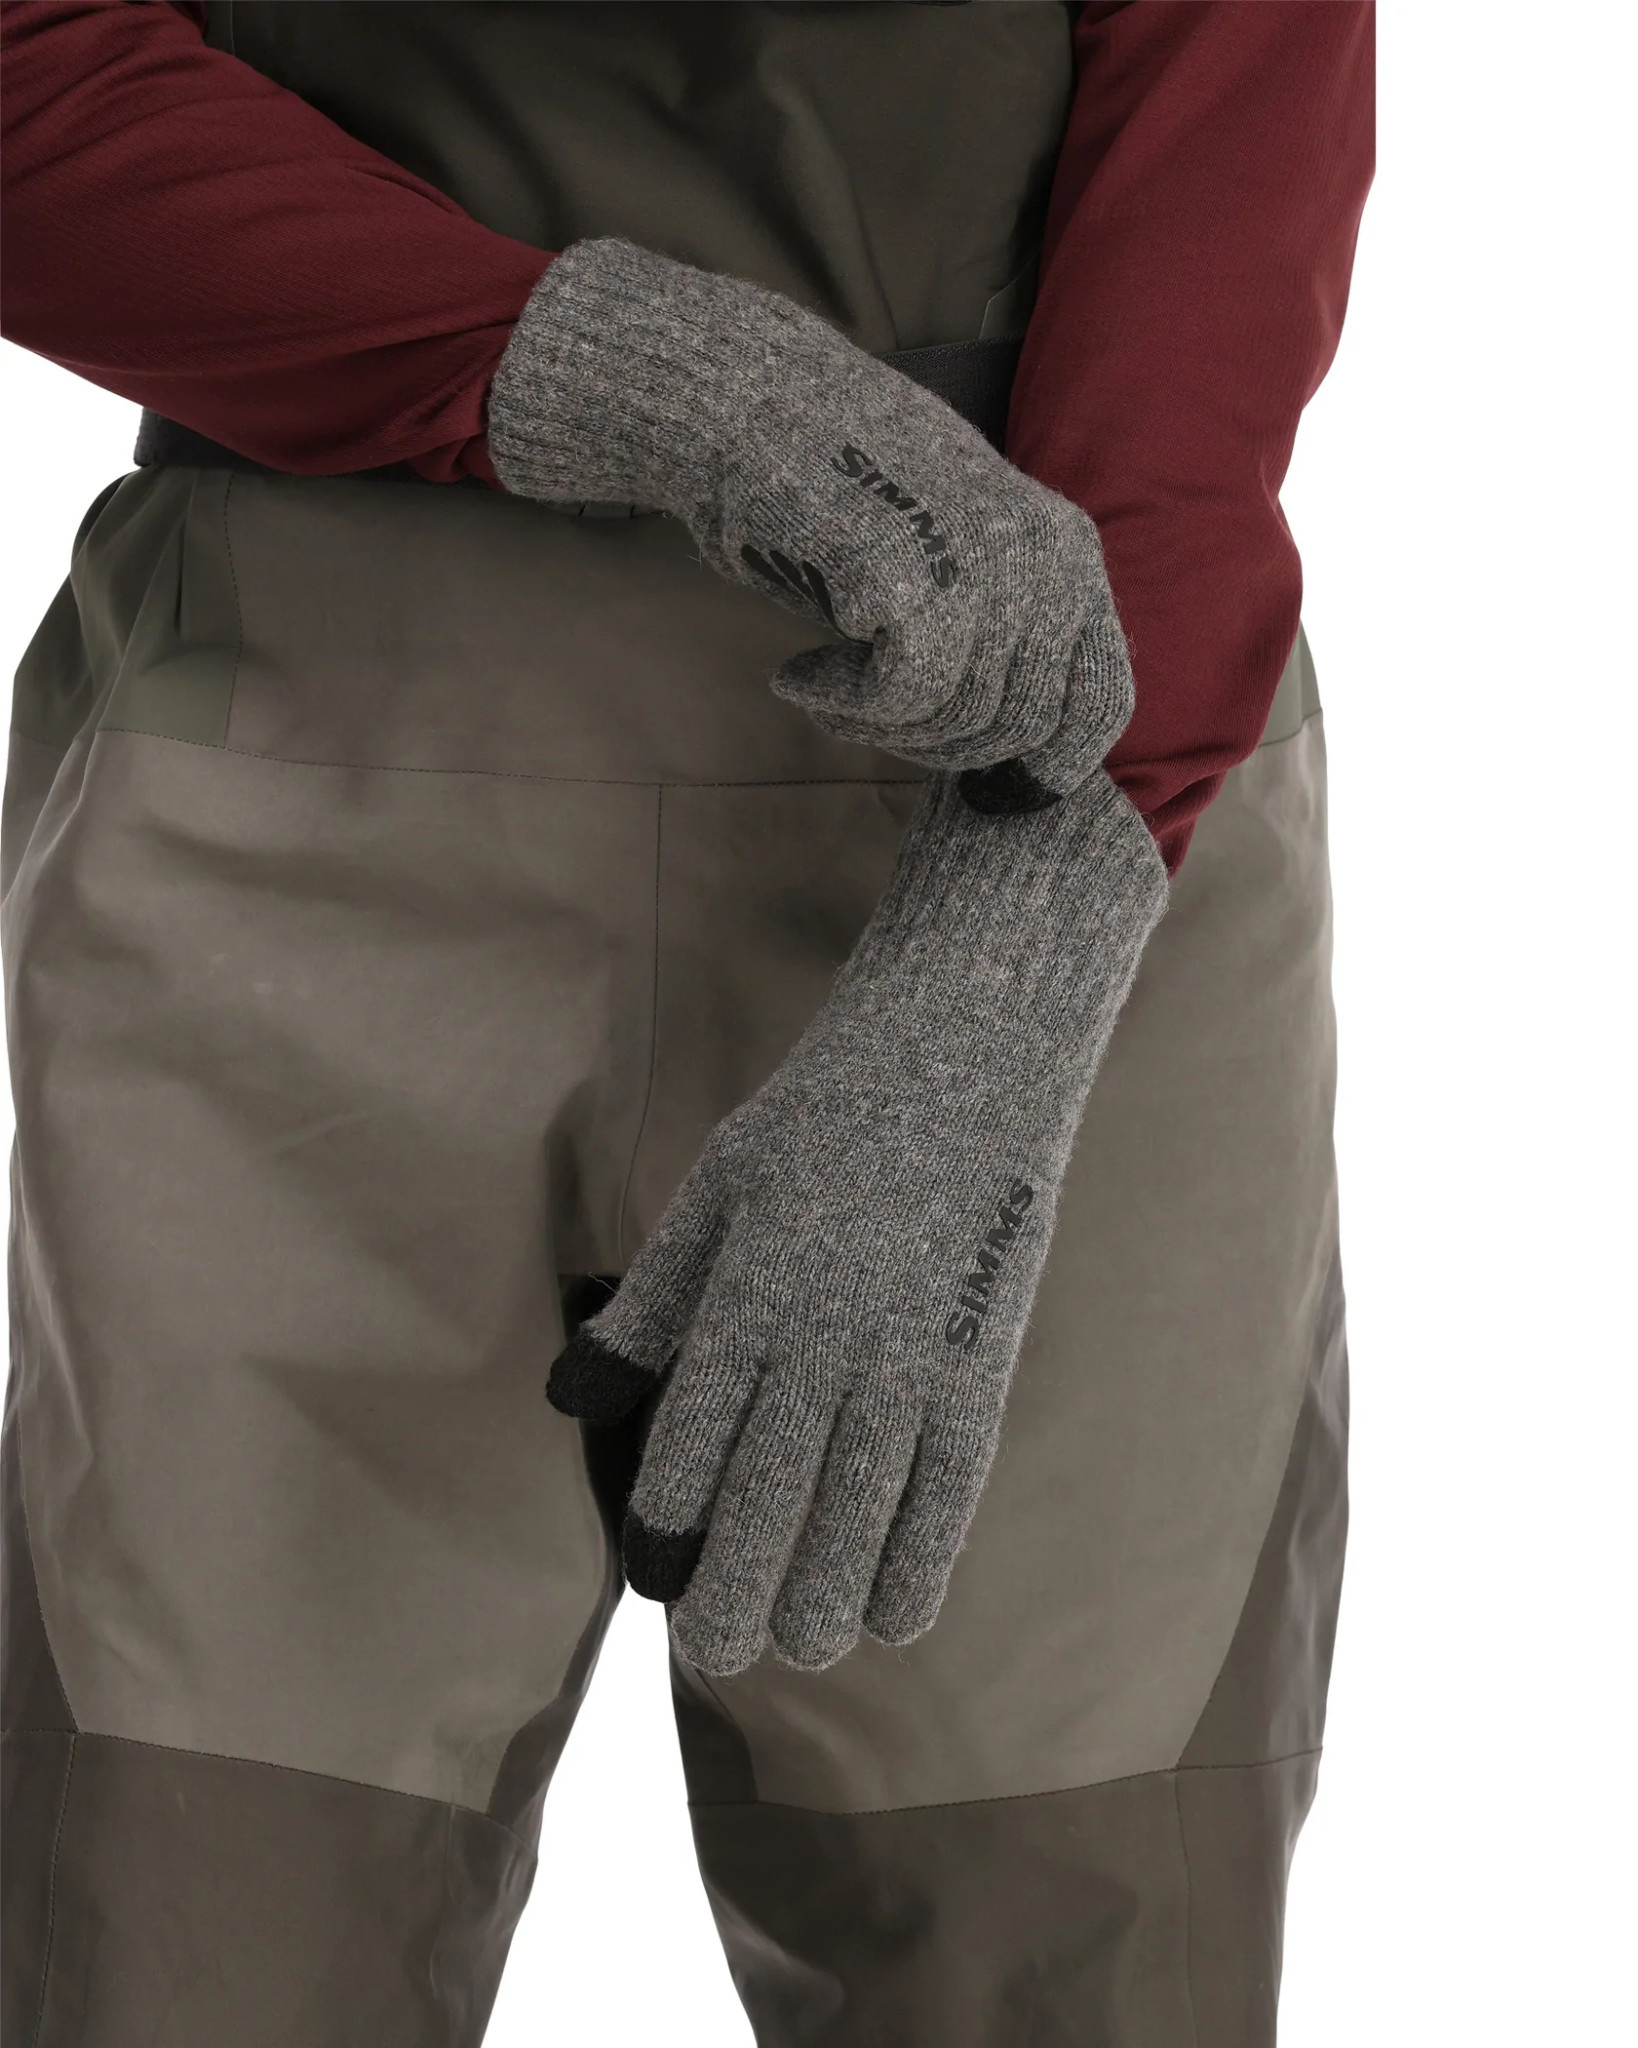 Simms Wool ½ Finger Glove Steel L/XL, Categories \ Fly Fishing Clothing \  Gloves, Socks